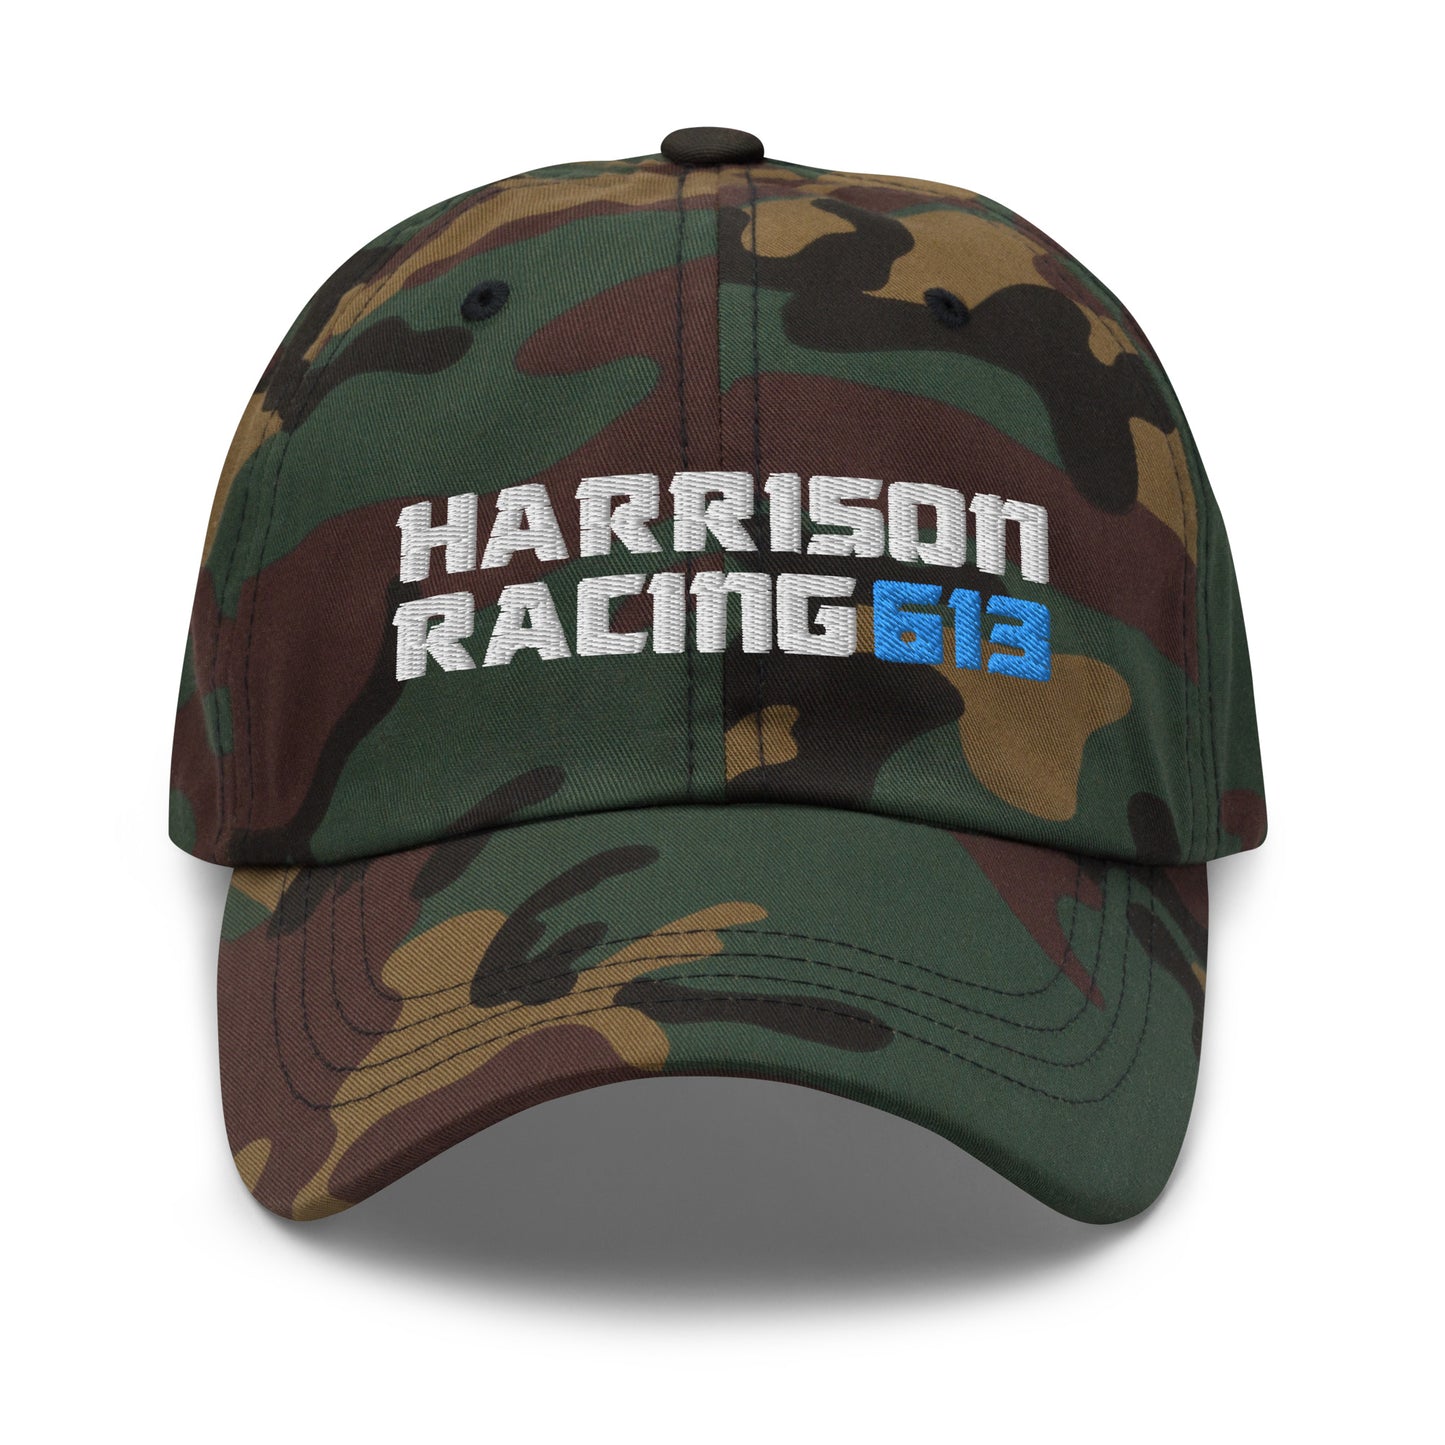 Harrison Racing 613 Dad Hat